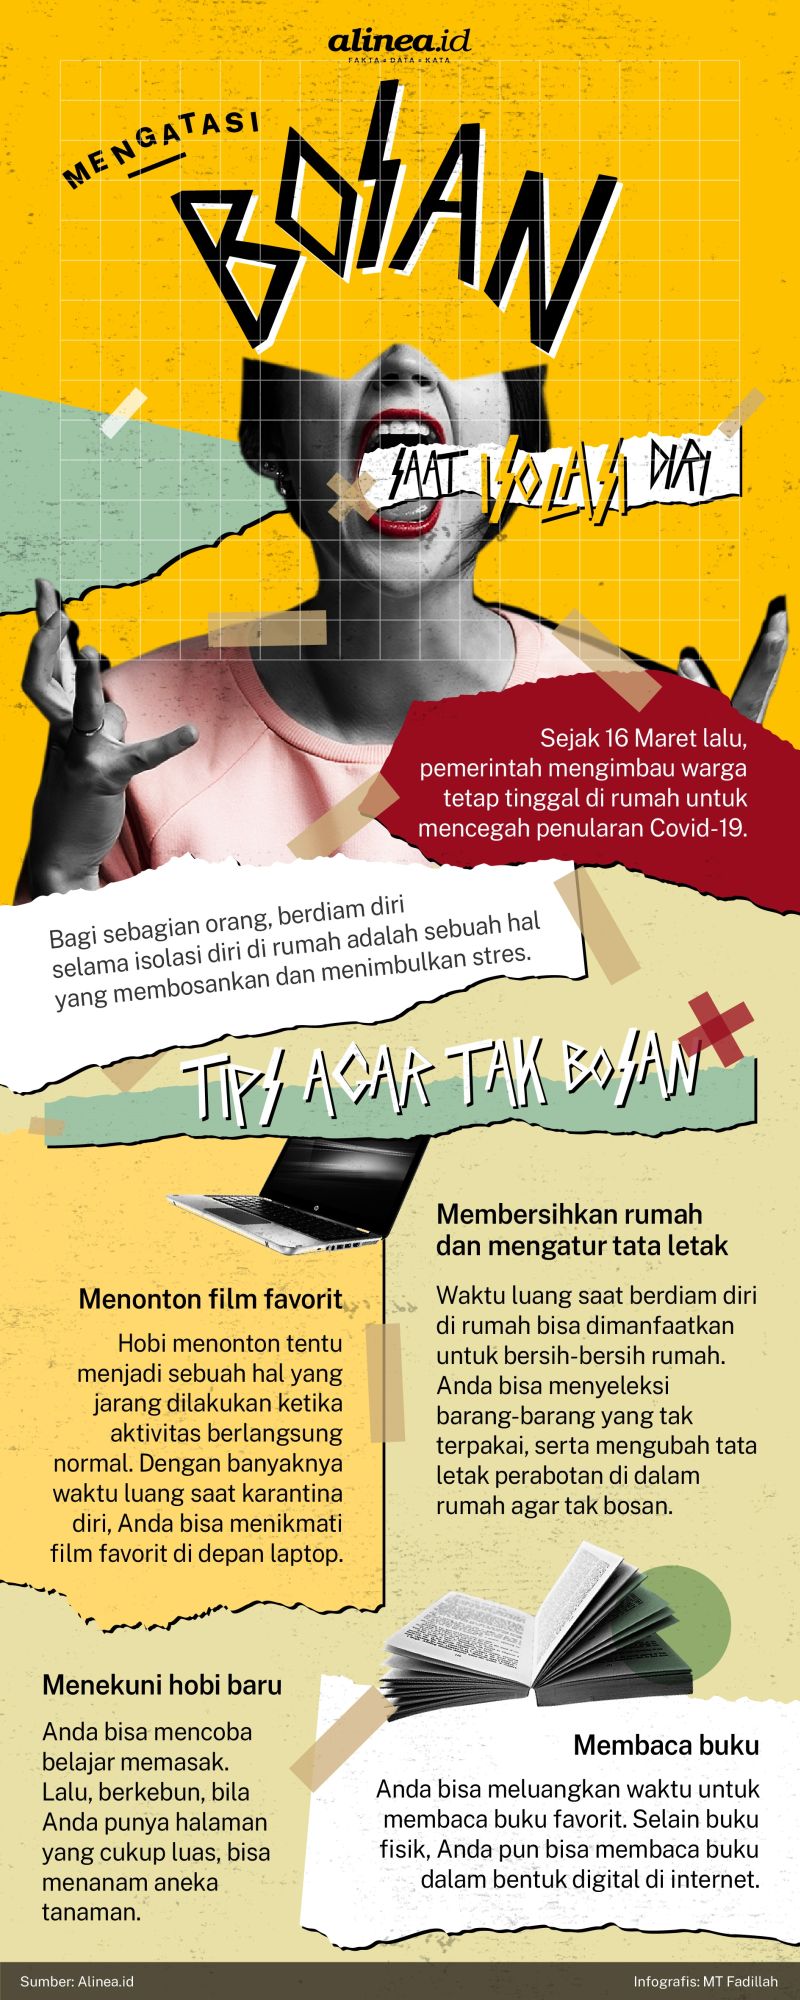 Infografik mengatasi bosa saat isolasi diri. Alinea.id/MT Fadillah.